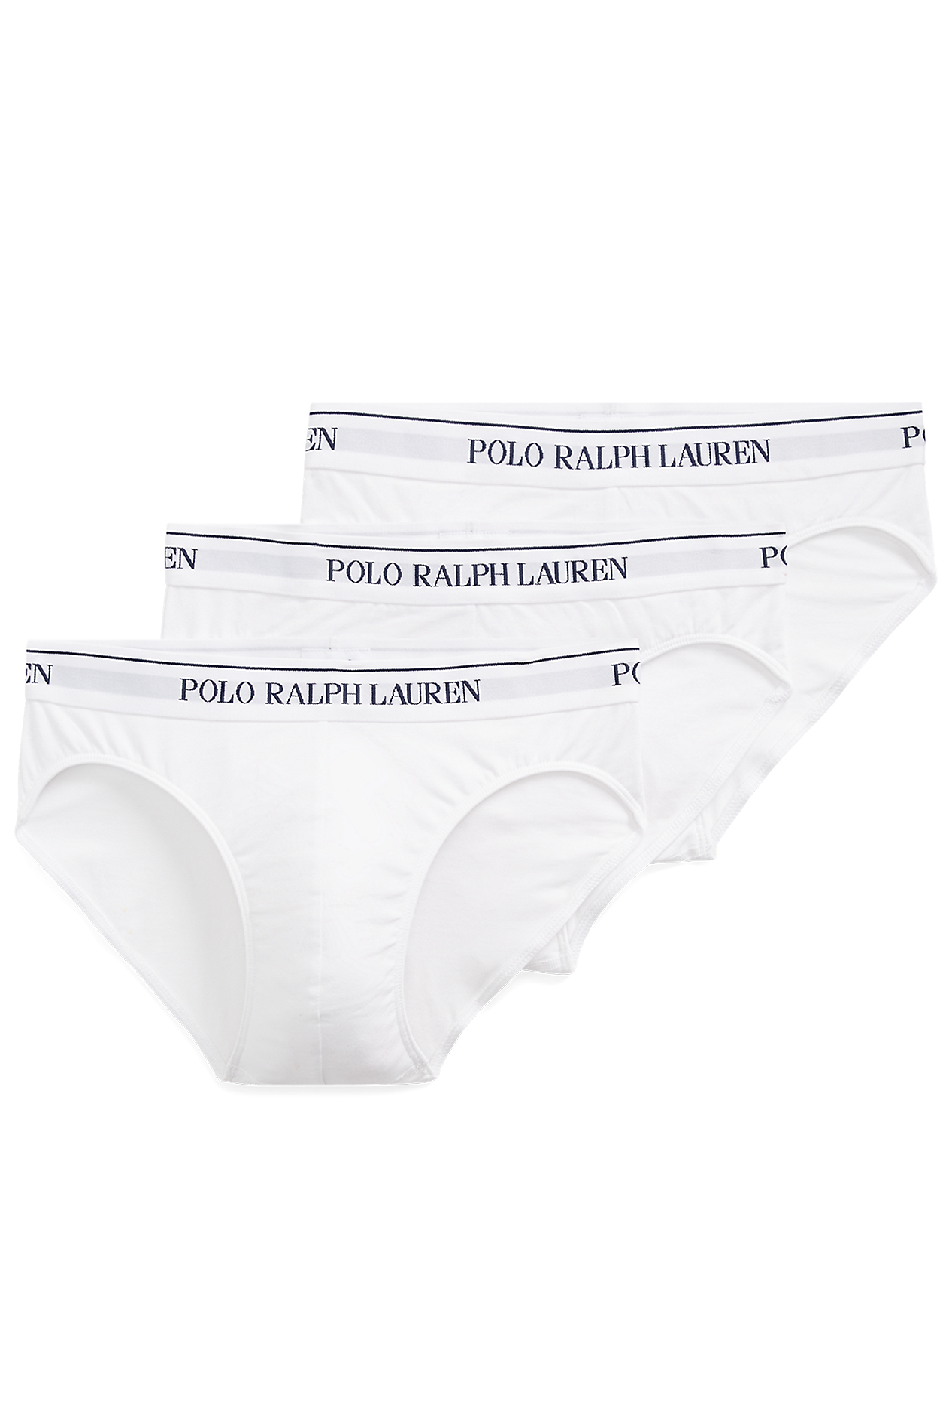 Polo Ralph Lauren 3 Pack Men's Briefs